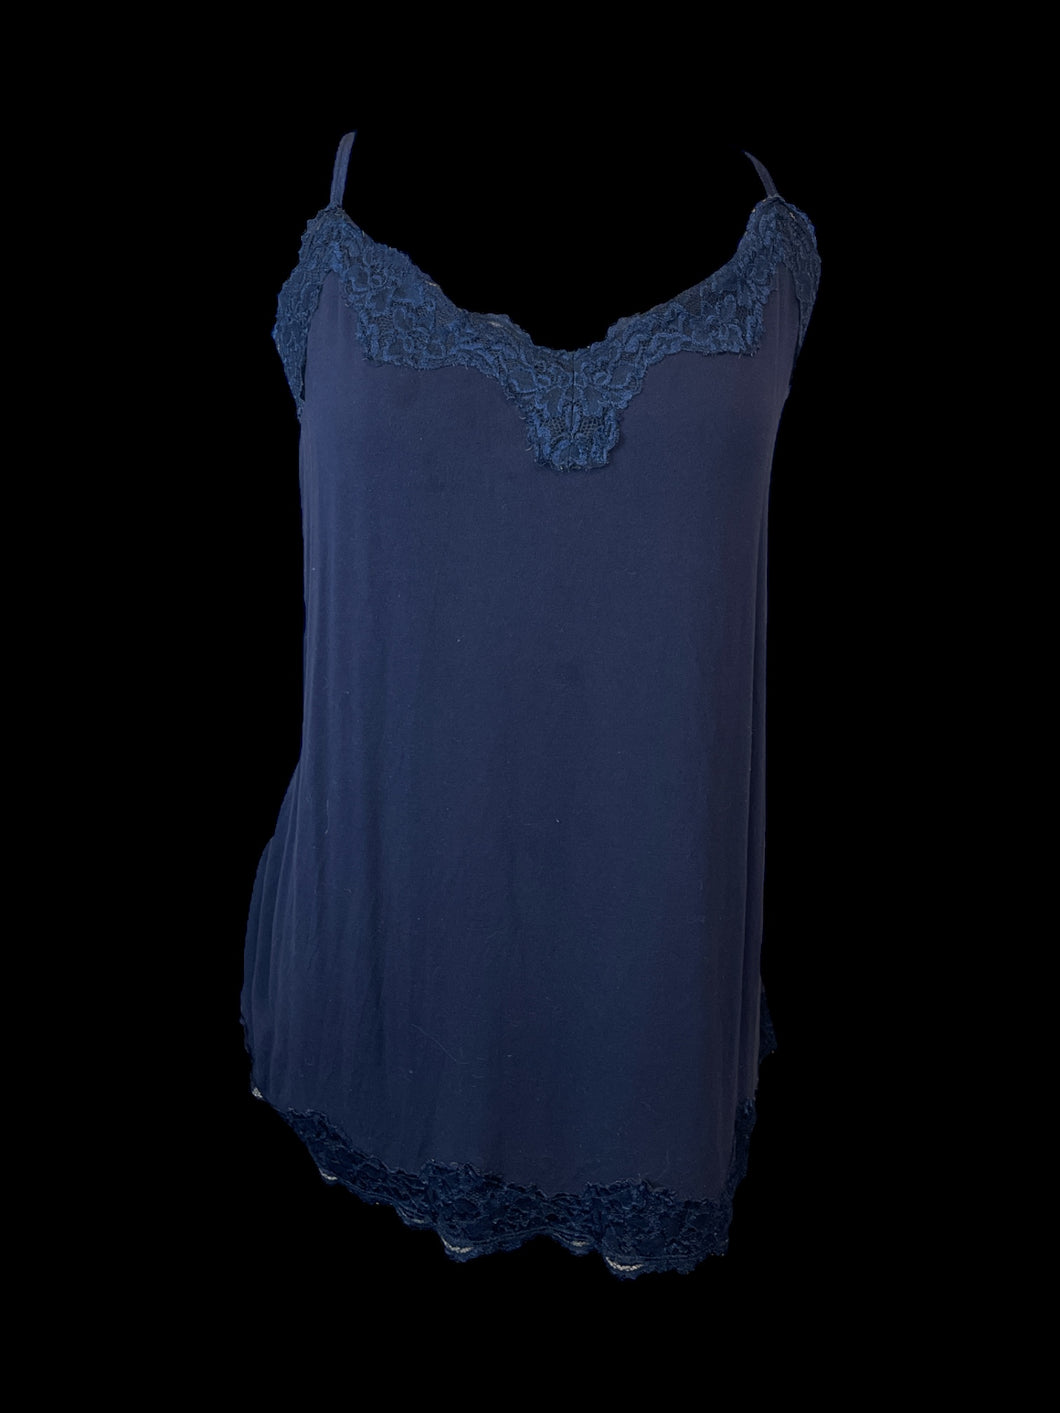 2X Dark blue sleeveless top w/ lace hem, & adjustable straps